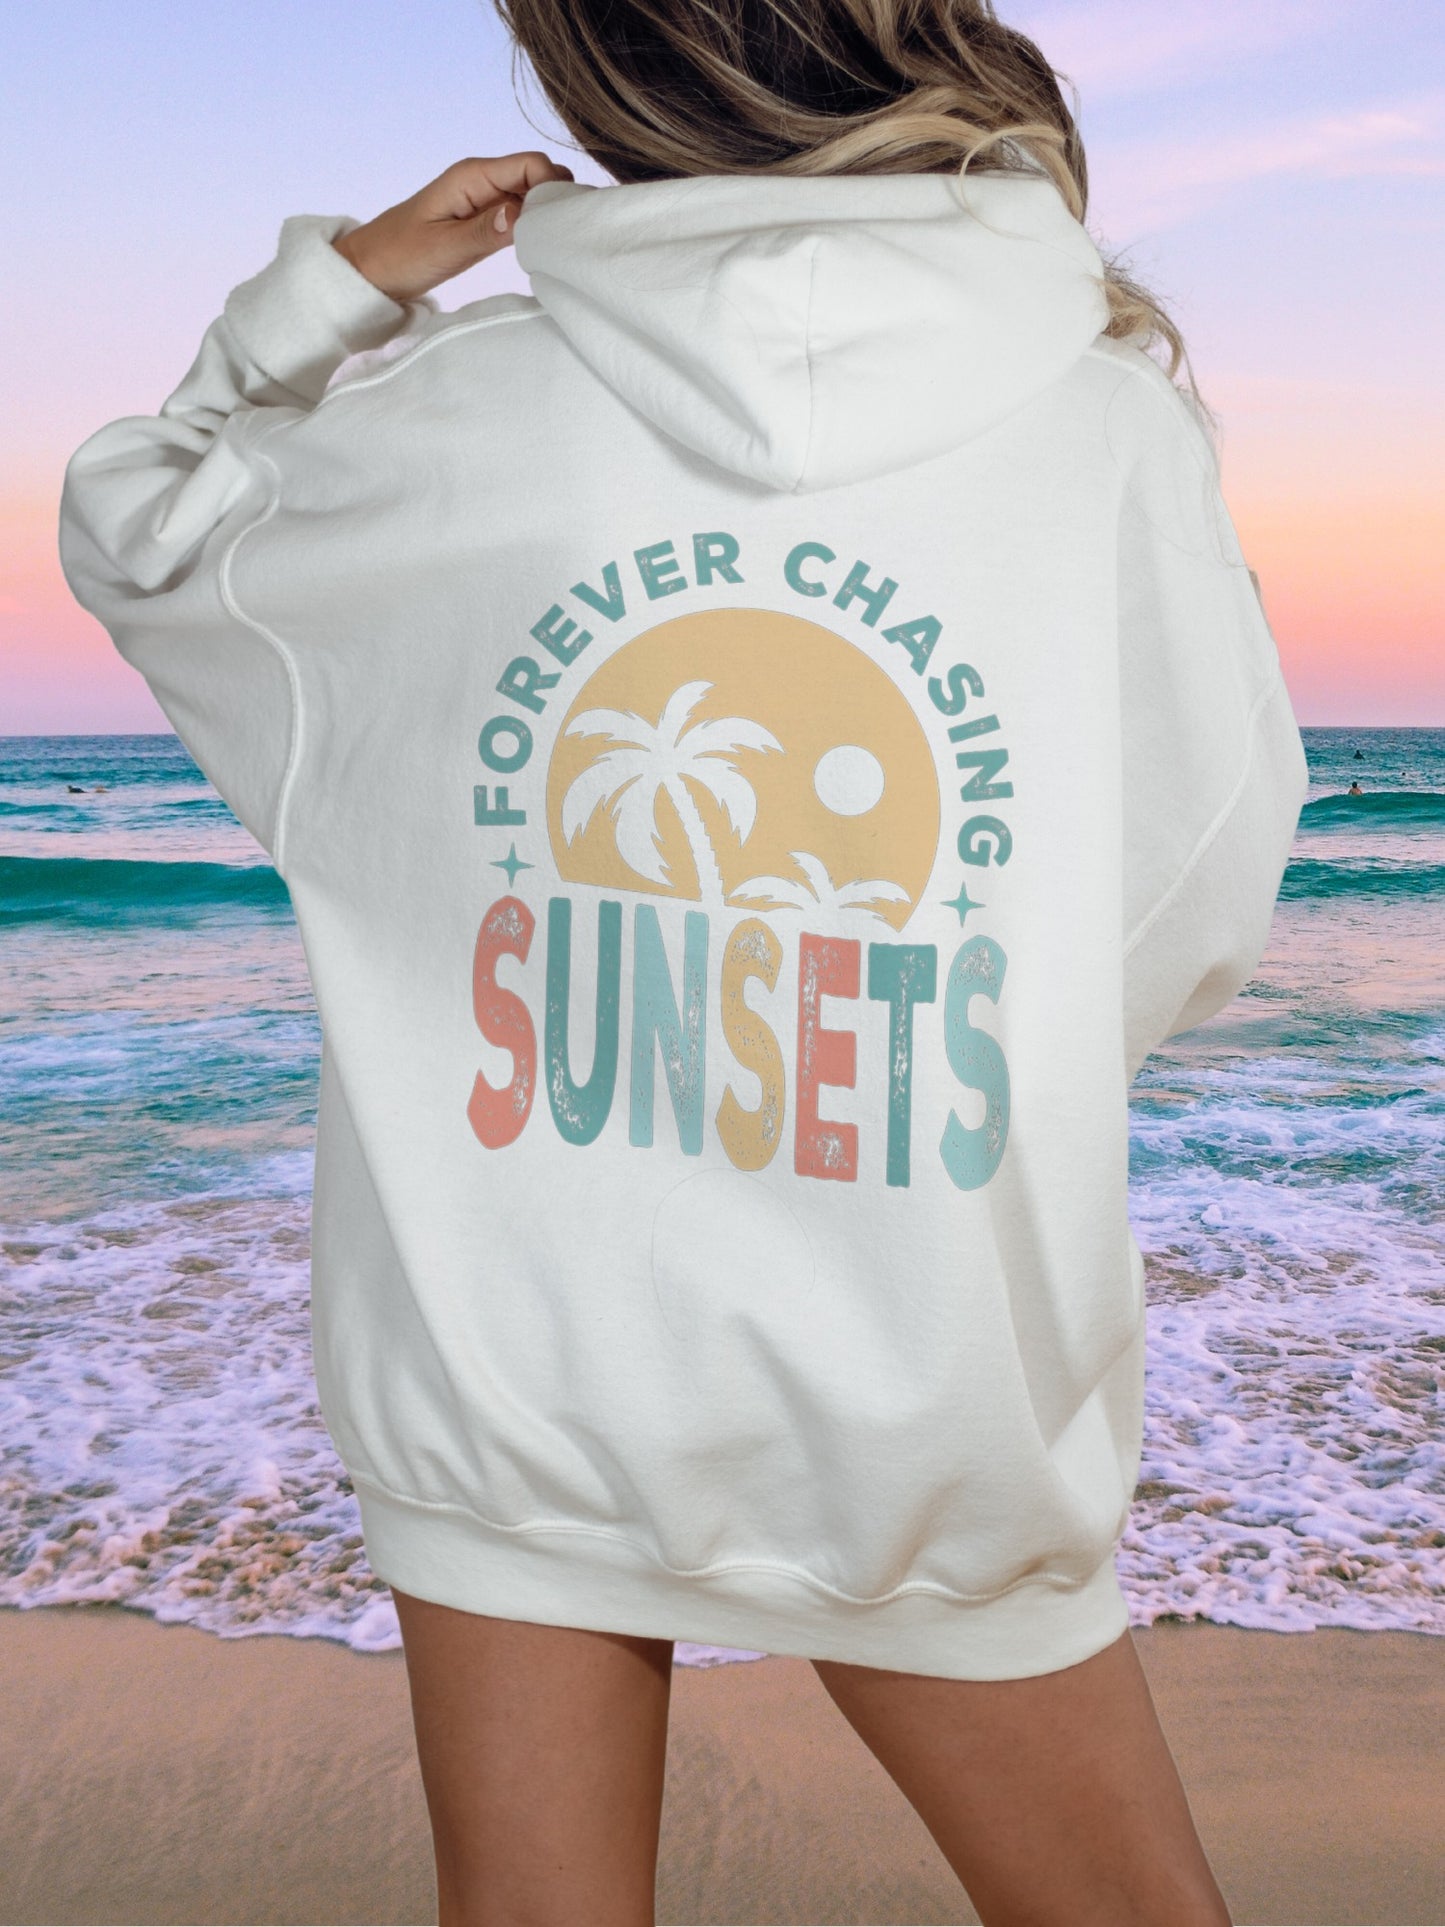 Forever Chasing Sunsets Sweatshirt Trendy Hoodies Aesthetic 